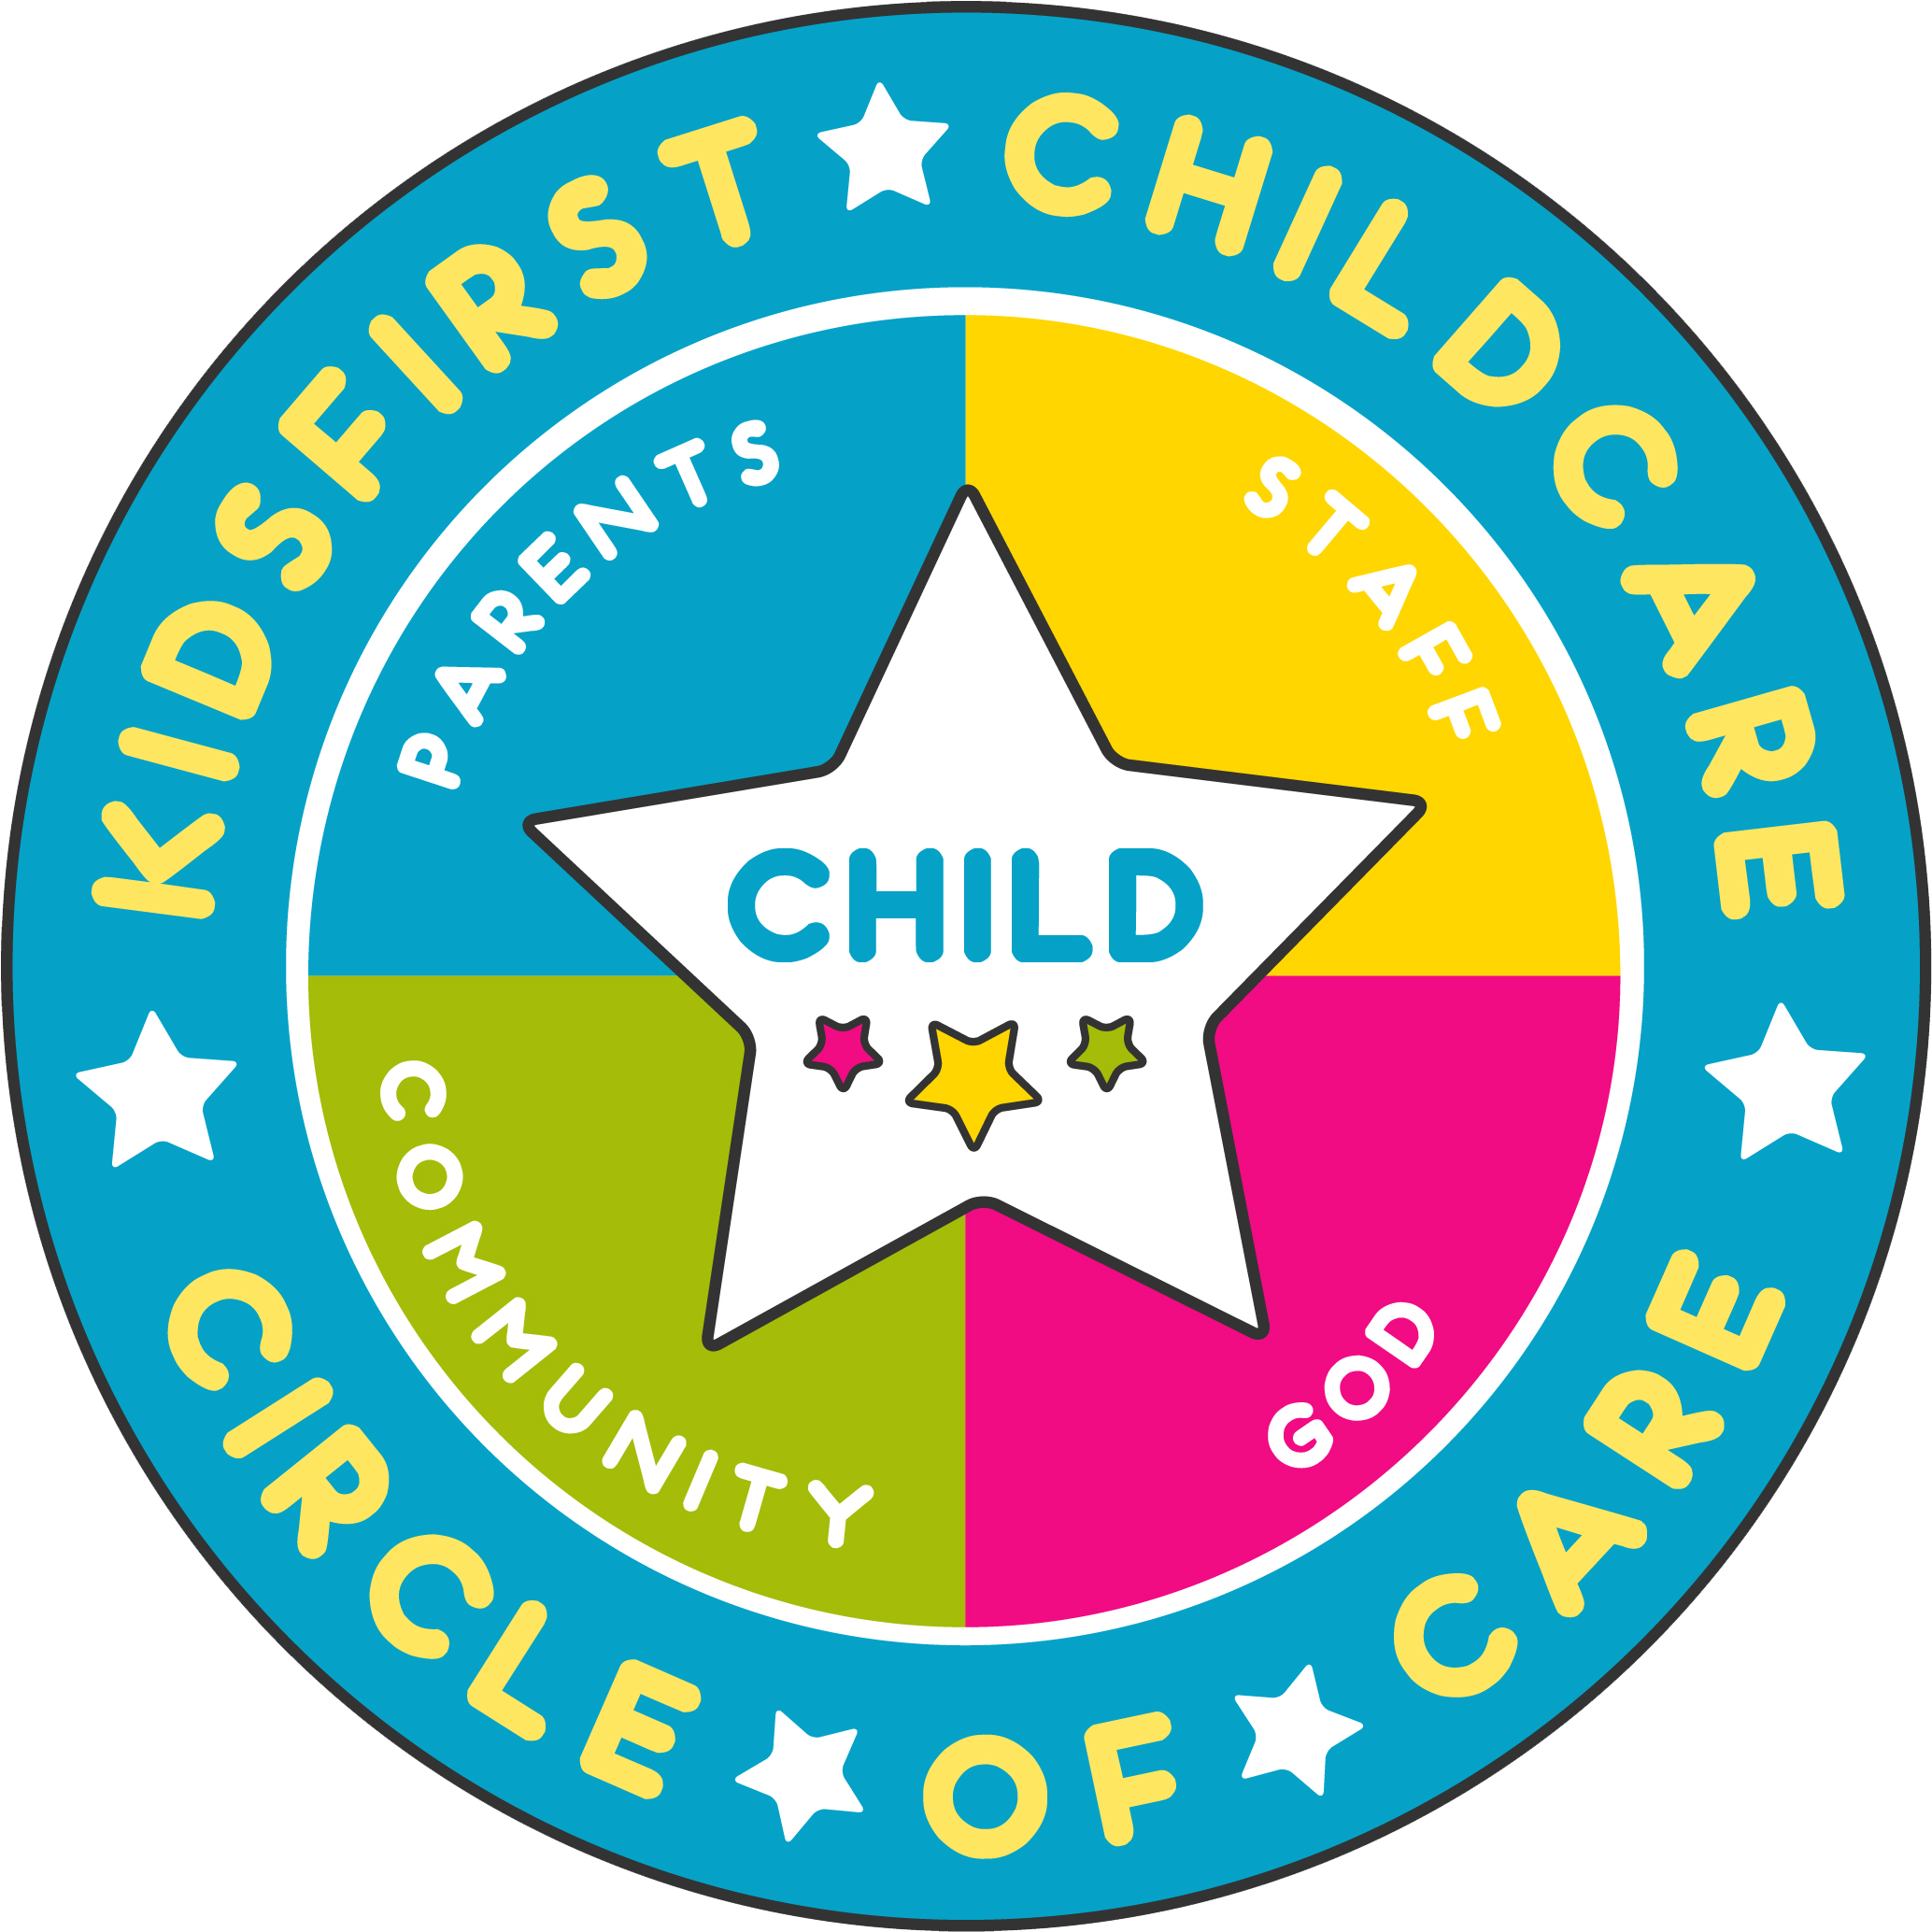 Kidsfirst Child Care Circle Of Care - Saratoga Springs (2228x2195)